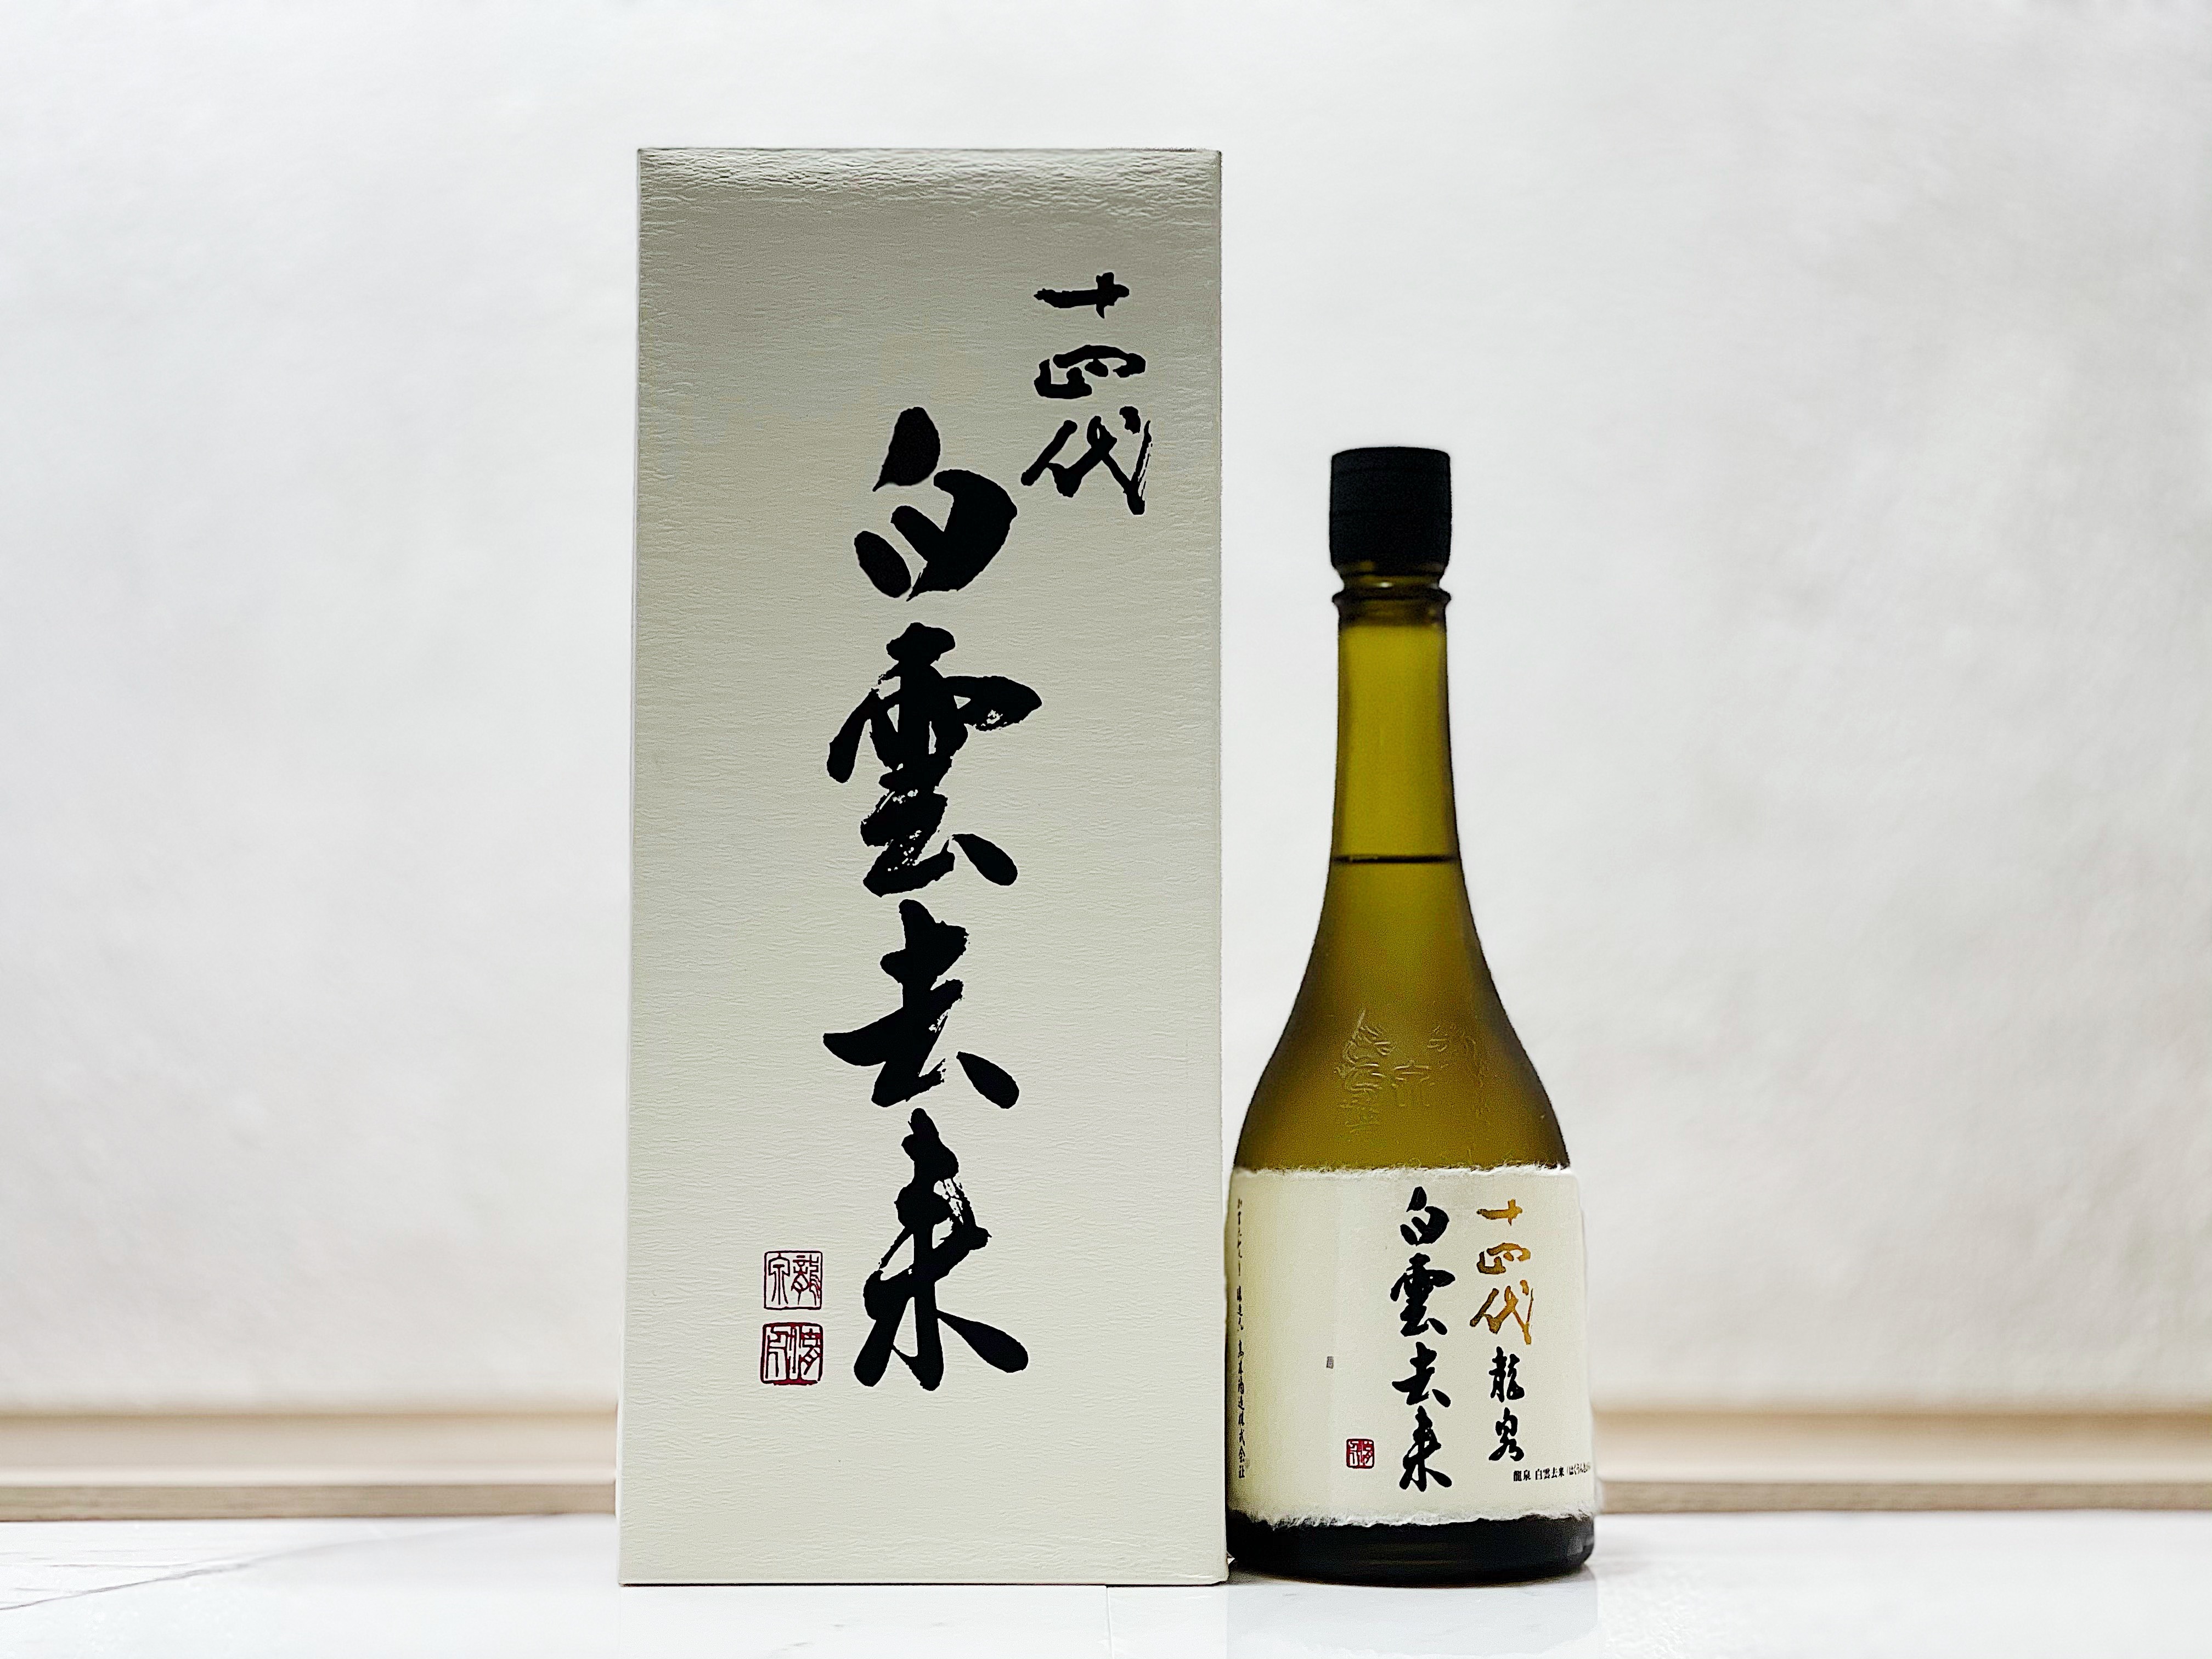 十四代 龍泉 空き瓶 未洗浄 720ml - 日本酒